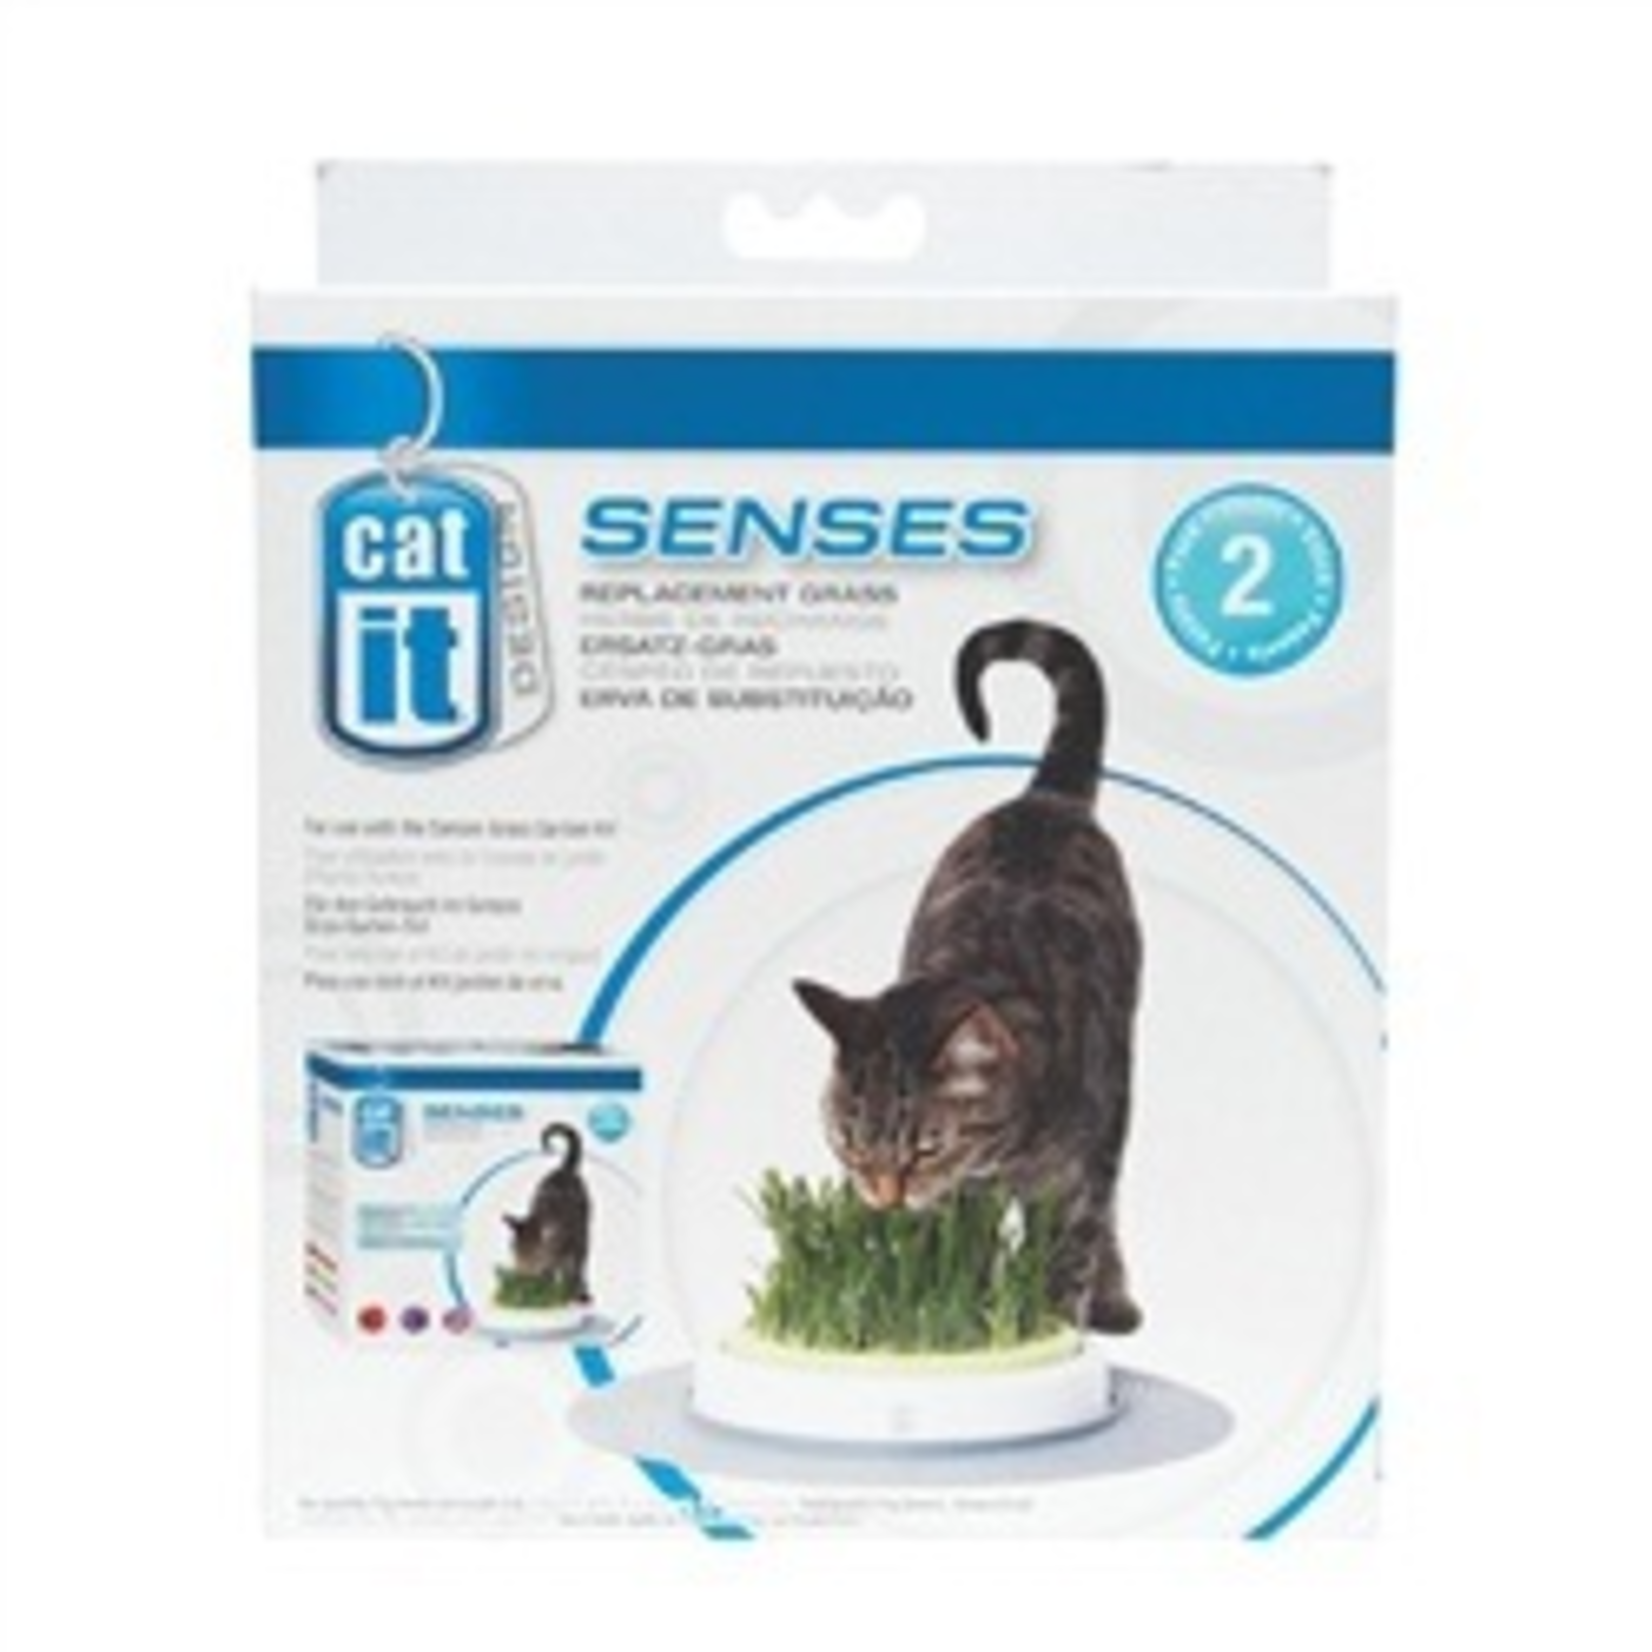 CAT IT (W) CA Des. Senses Grass Garden Refill,2pk